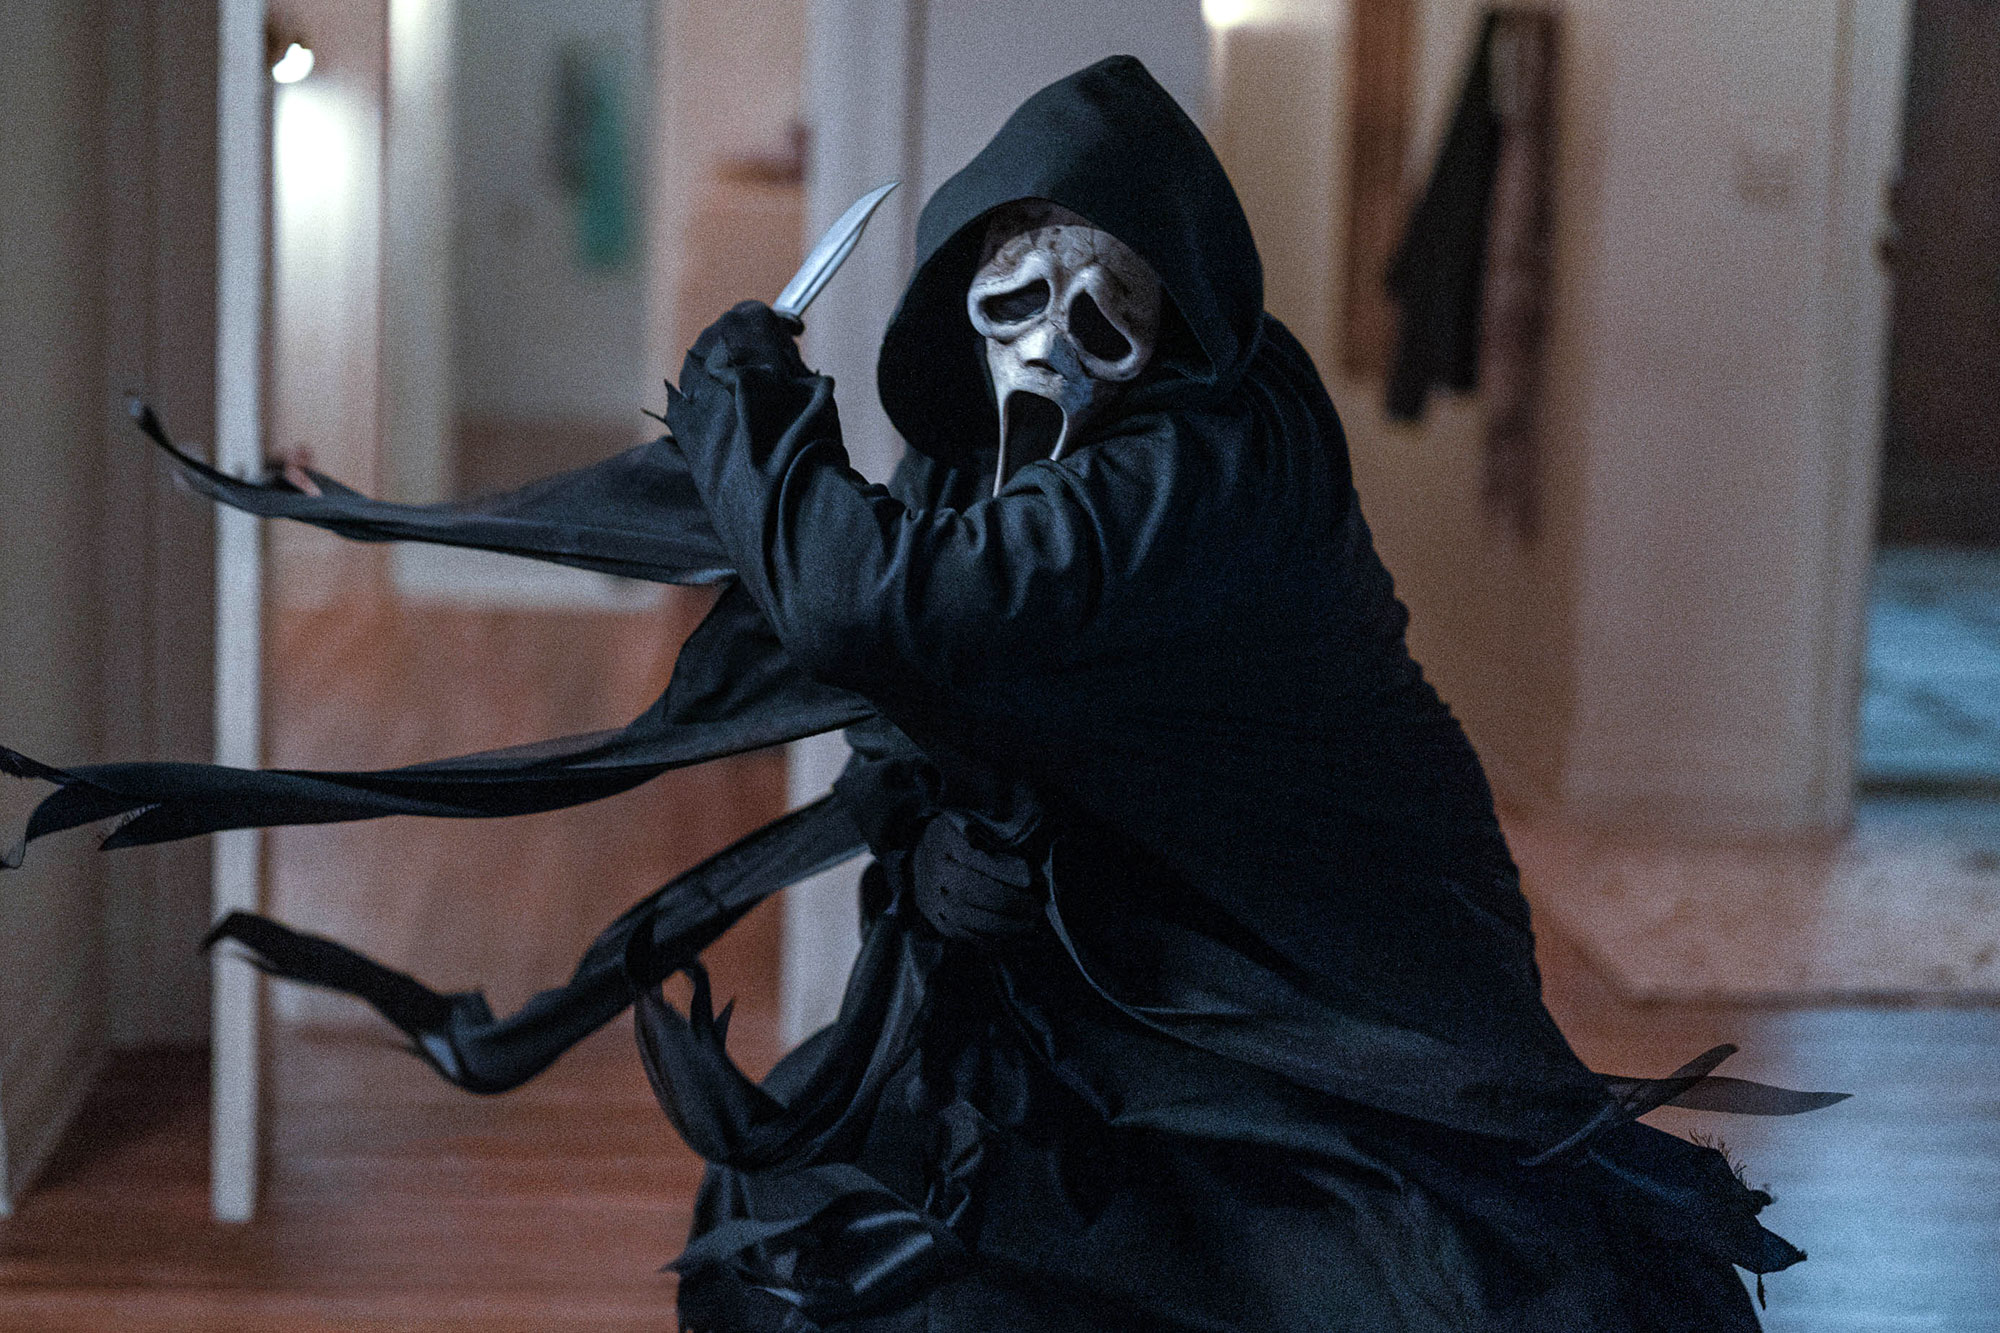 How well do you know the movie Scream VI?